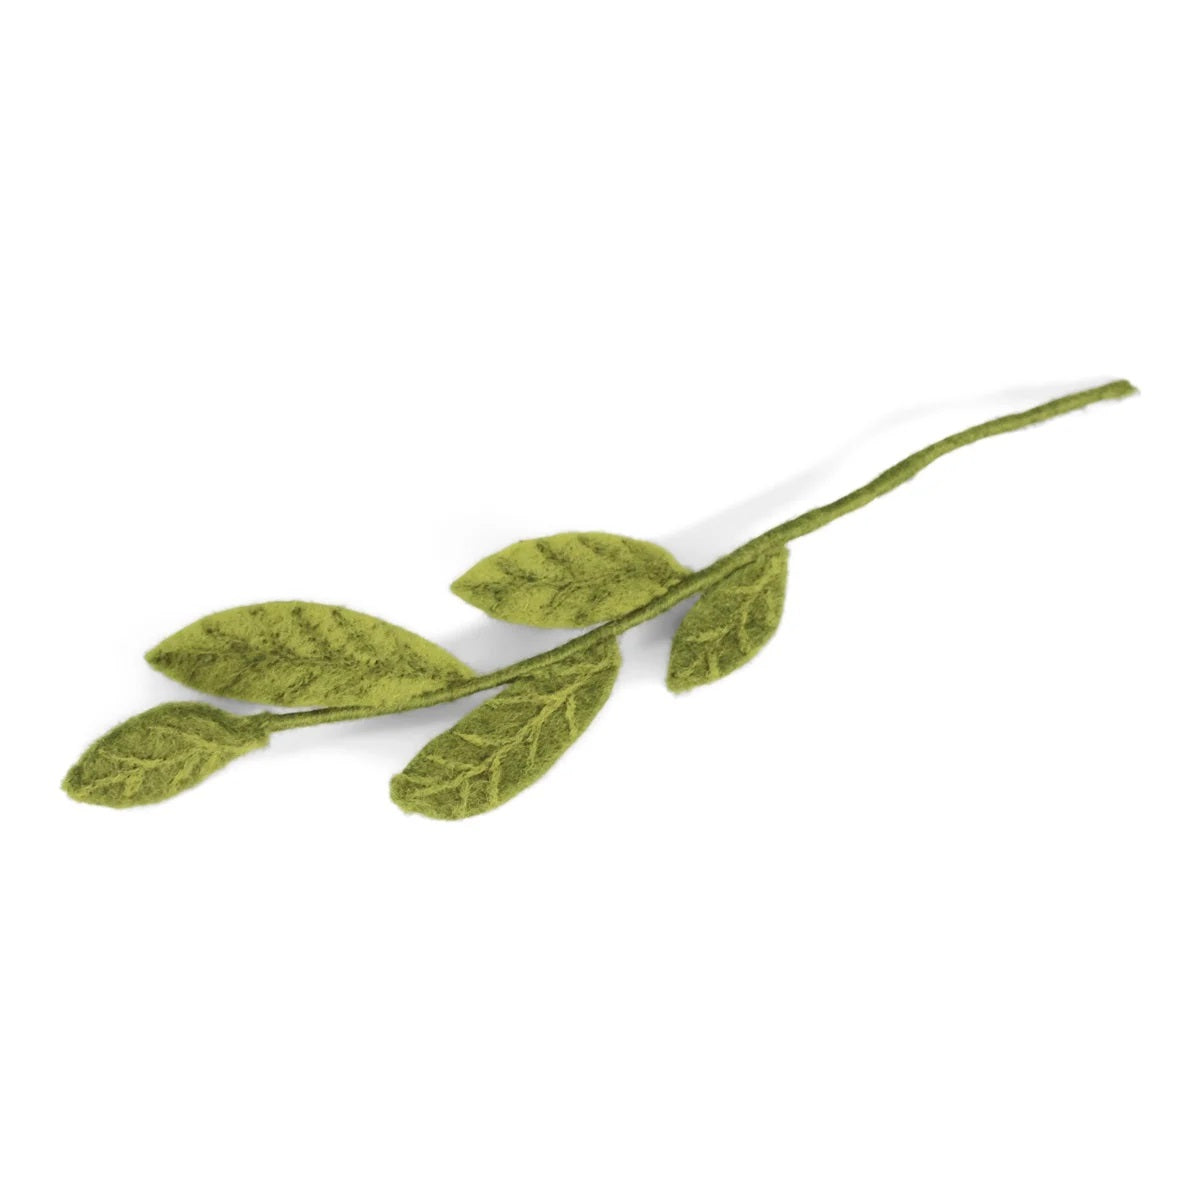 Gry & Sif - Gren med grønne blade